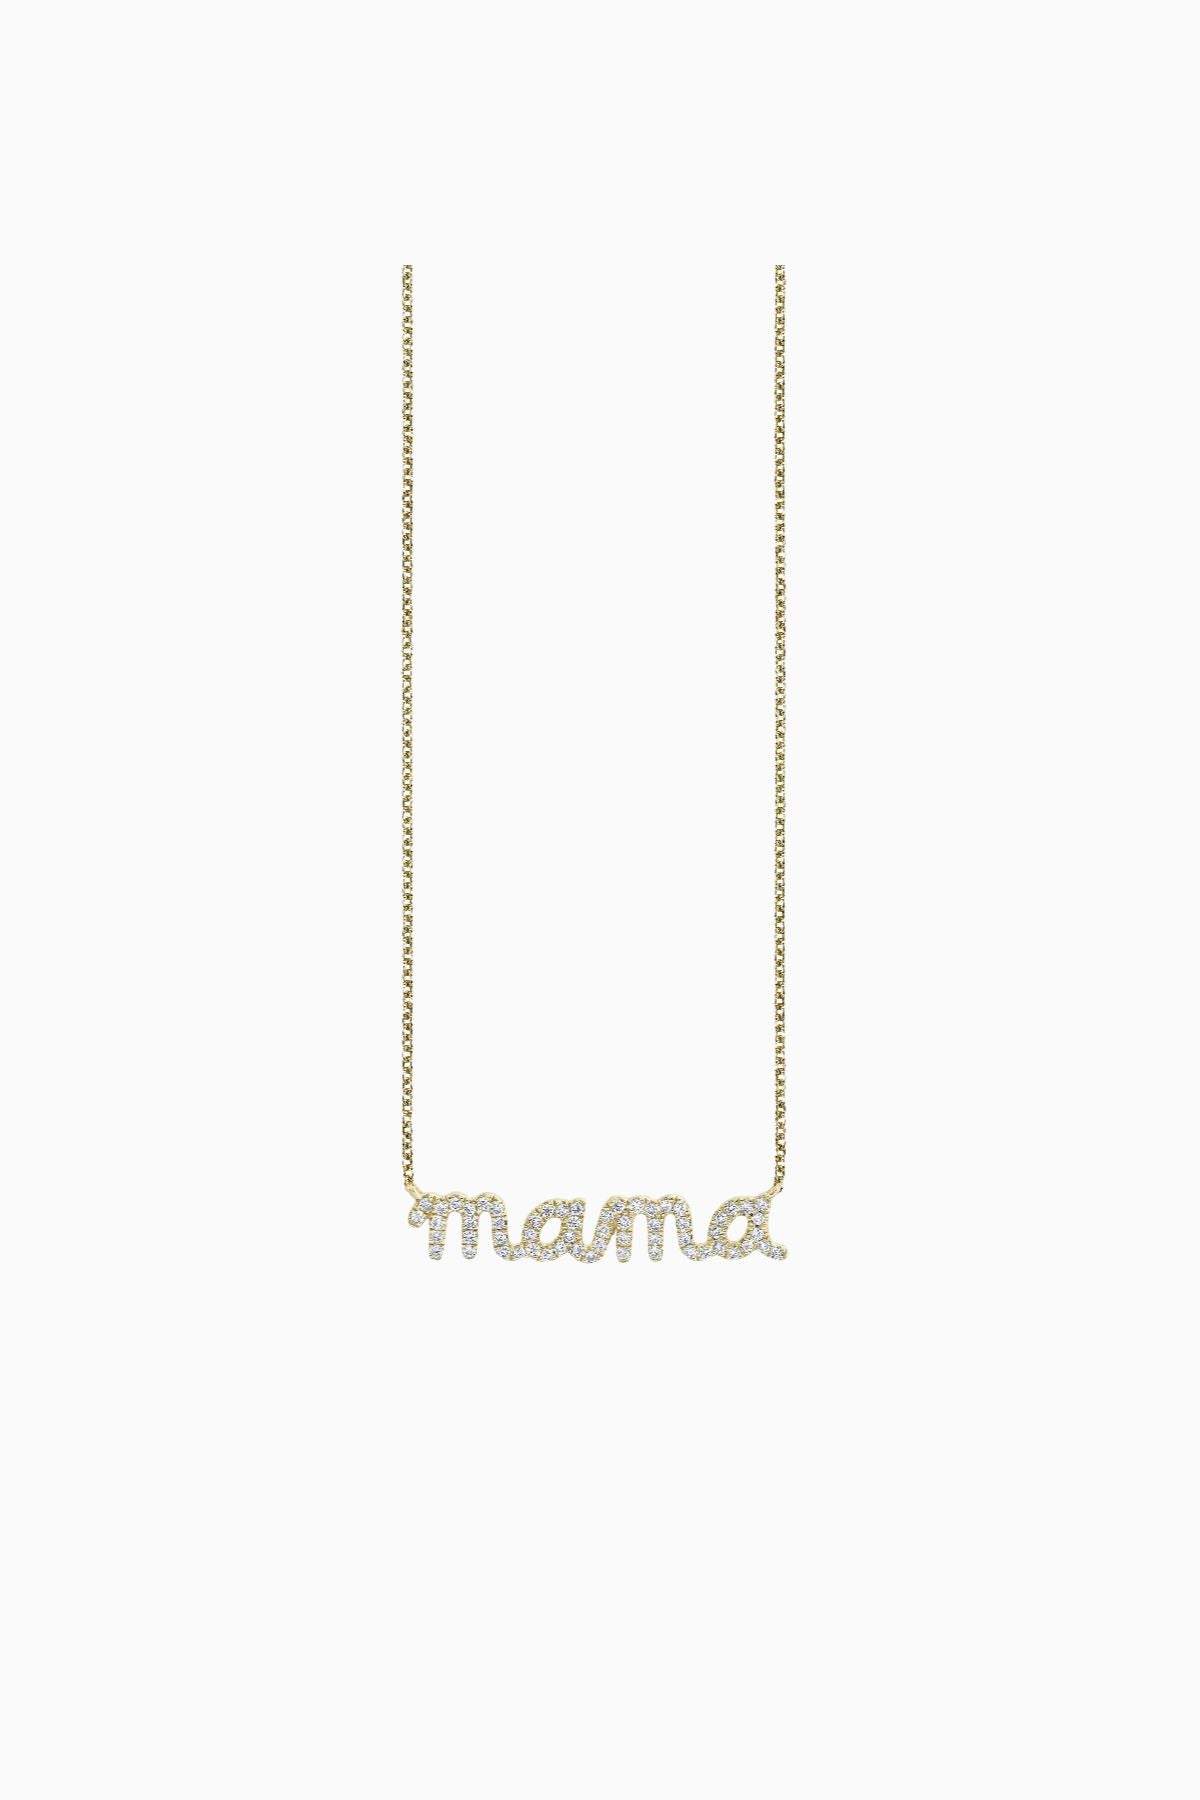 Sydney Evan Mama Script Necklace - Yellow Gold